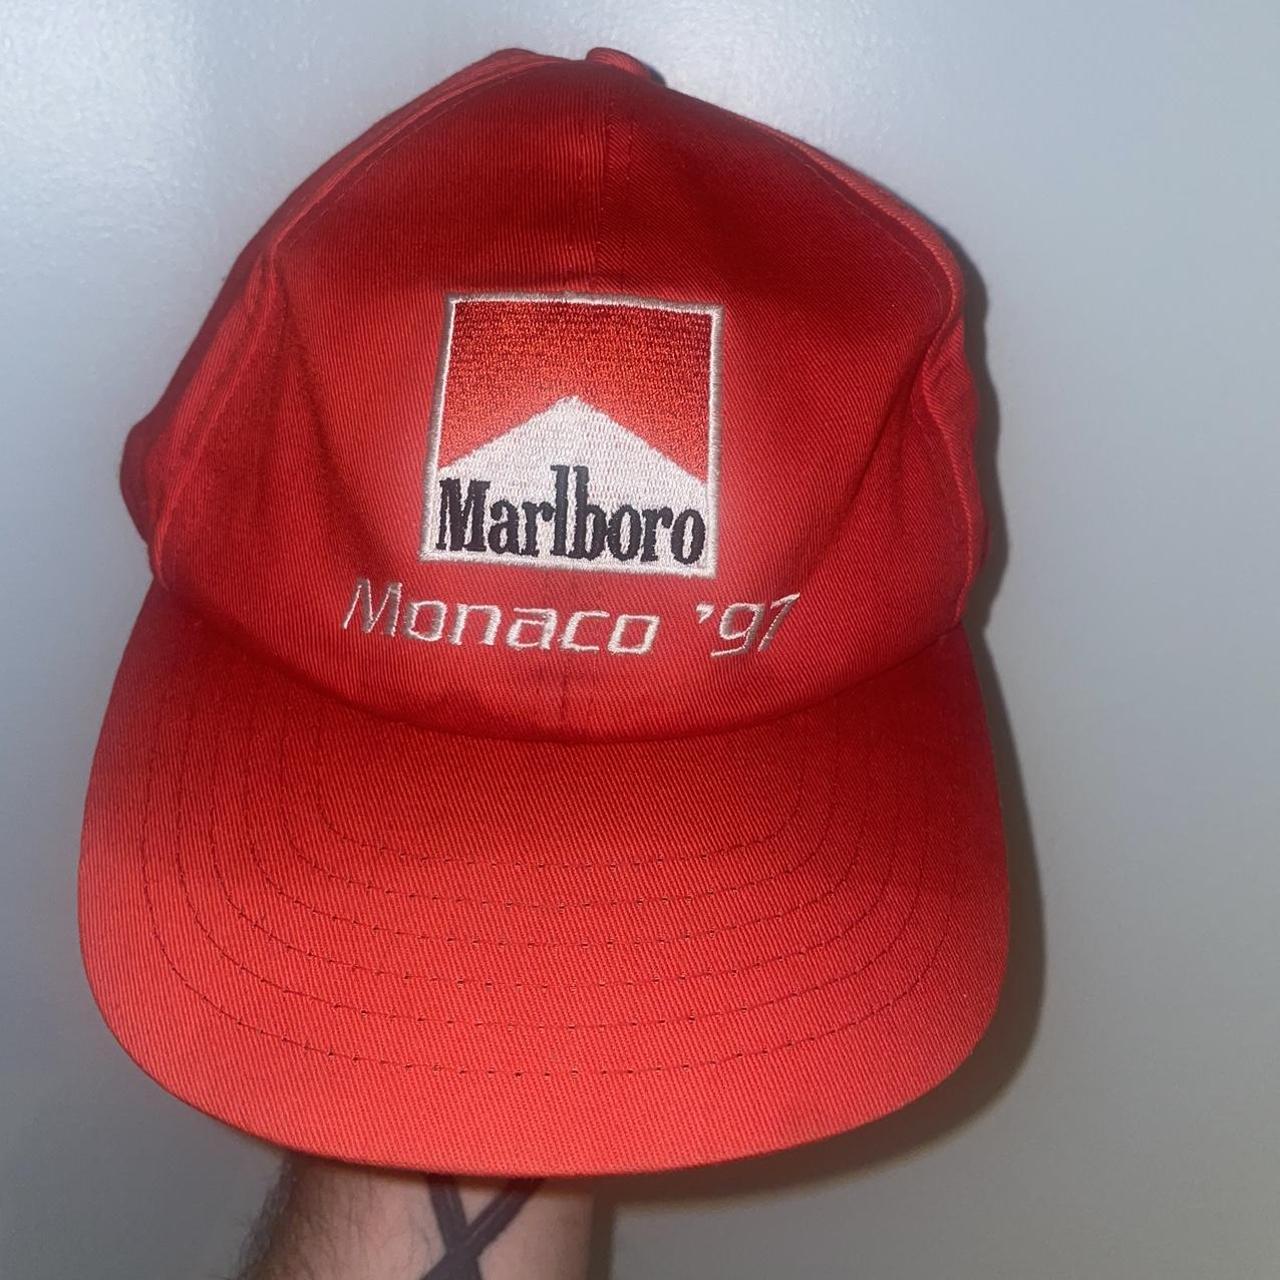 Vintage Marlboro Monaco Grand Prix 97 hat - used but